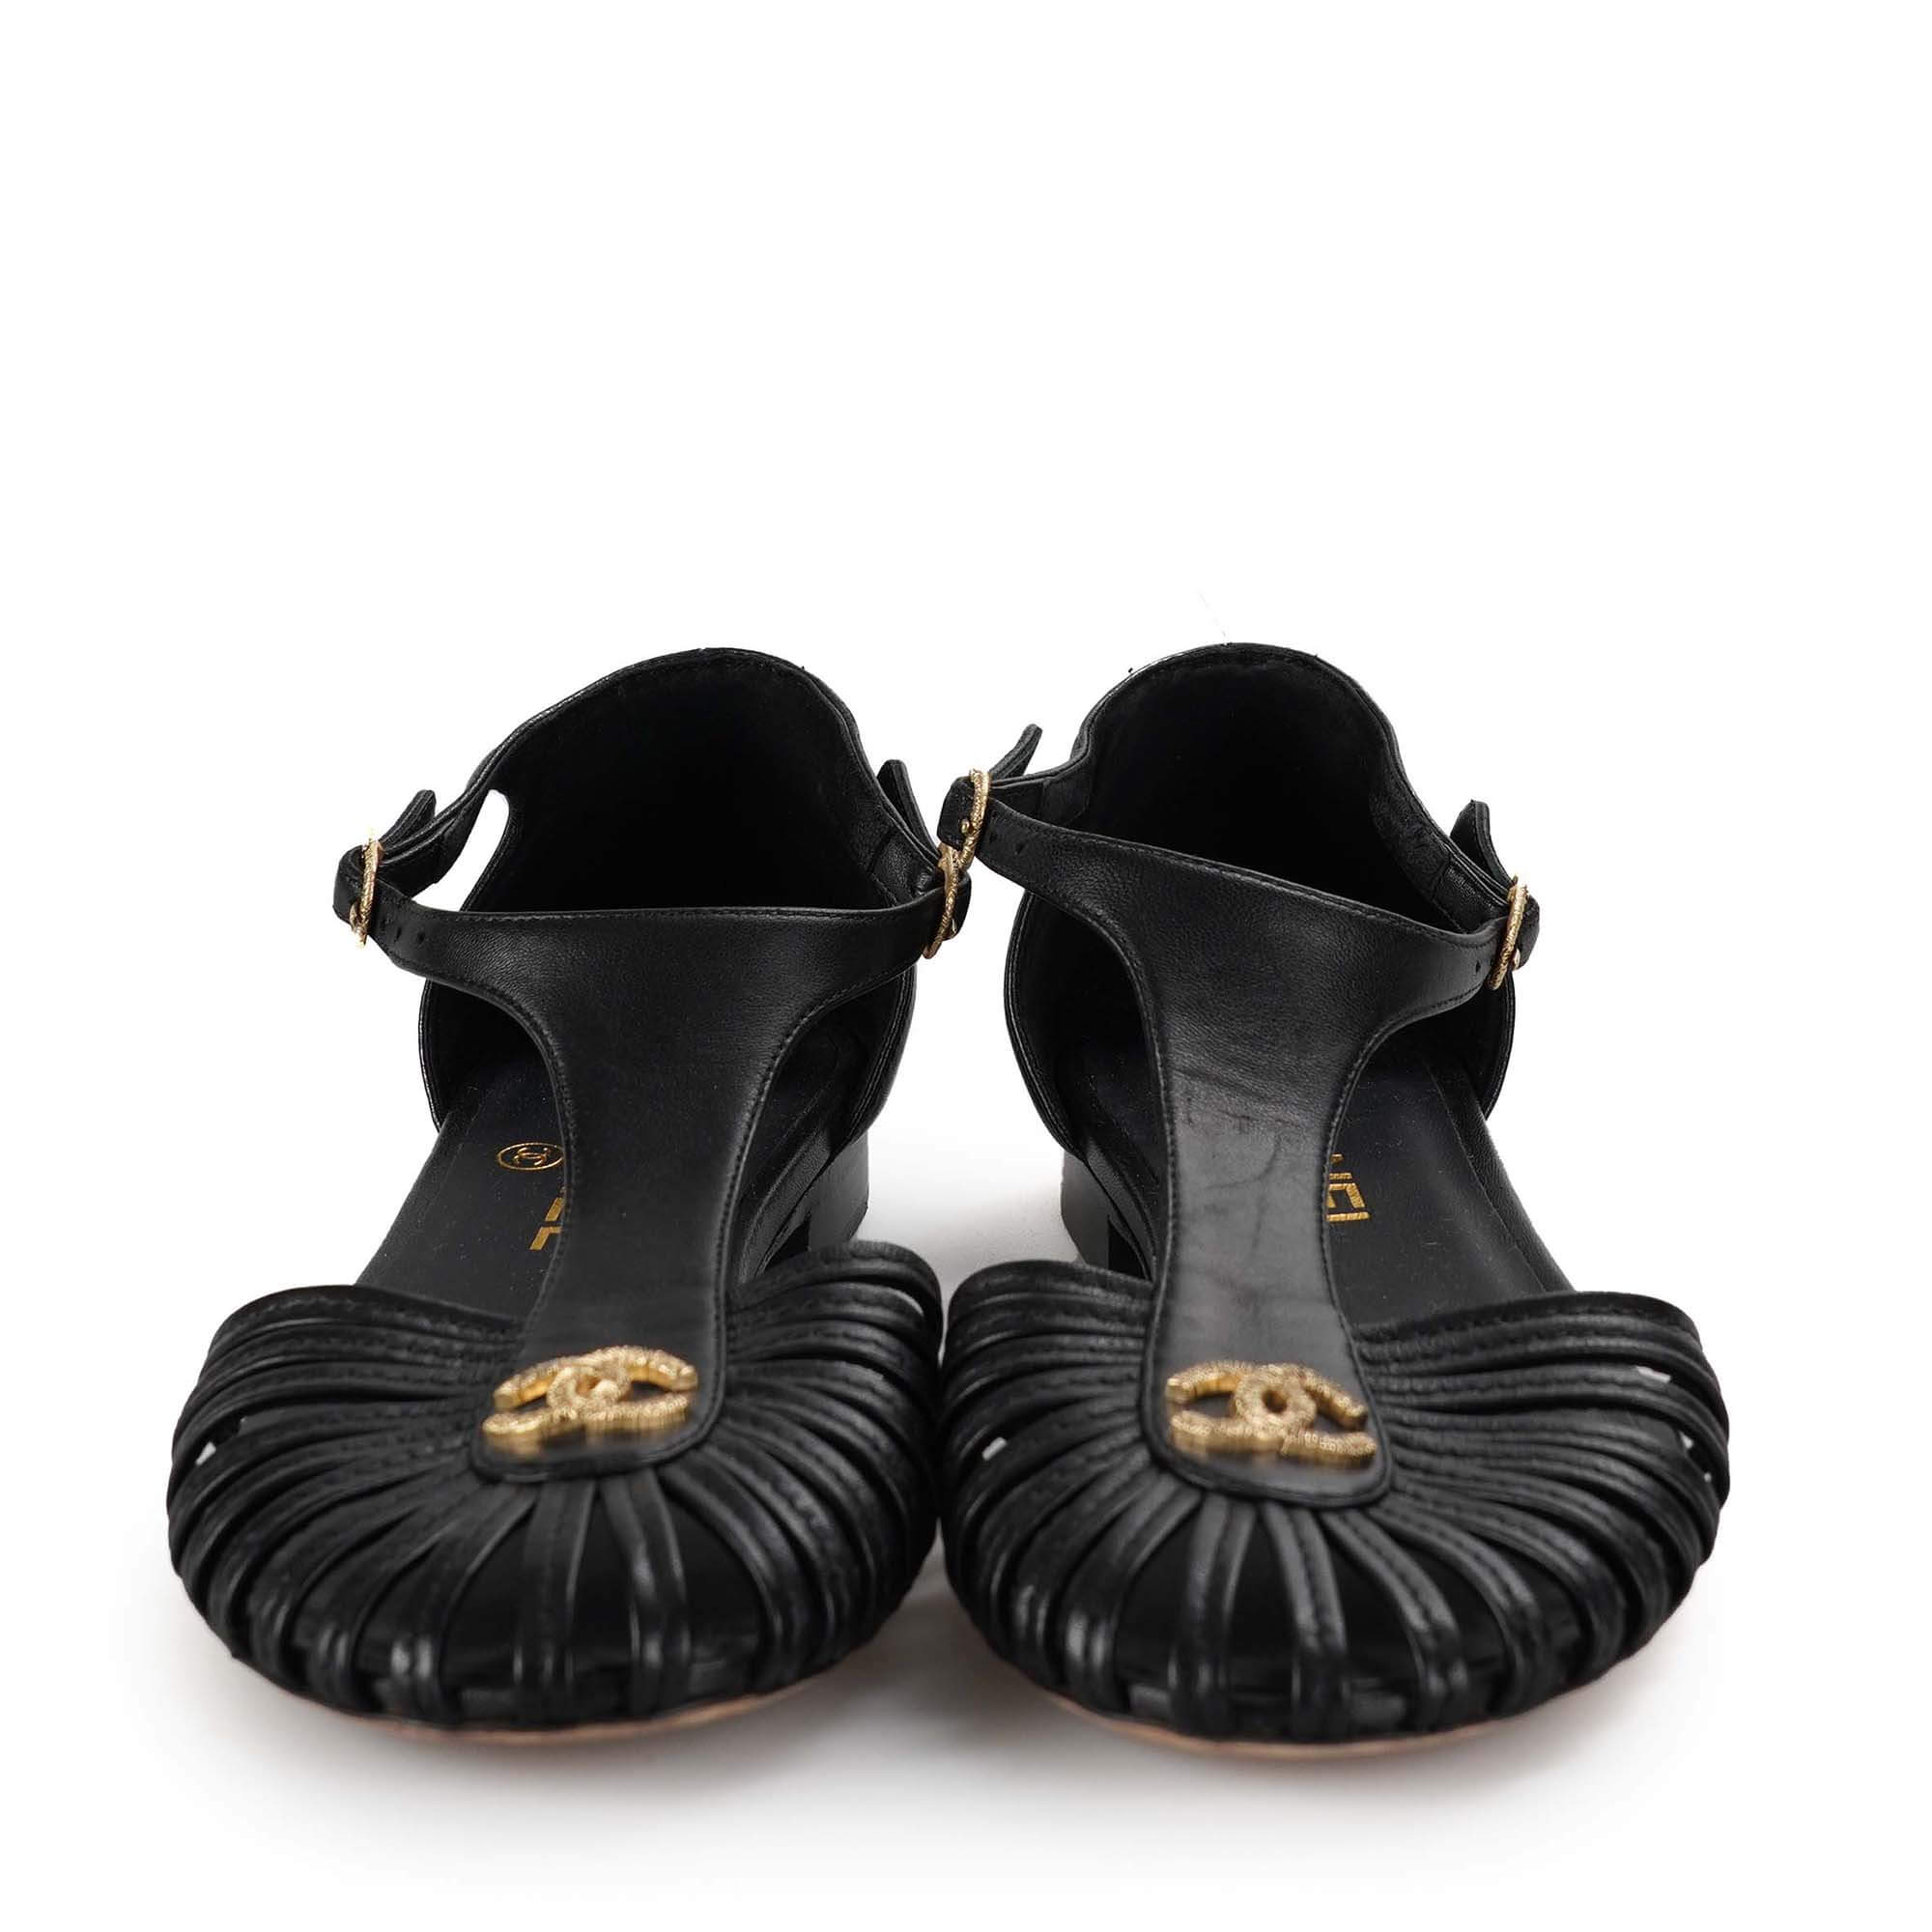 Chanel - Black Leather Ballerina Cc Flats Sandals 